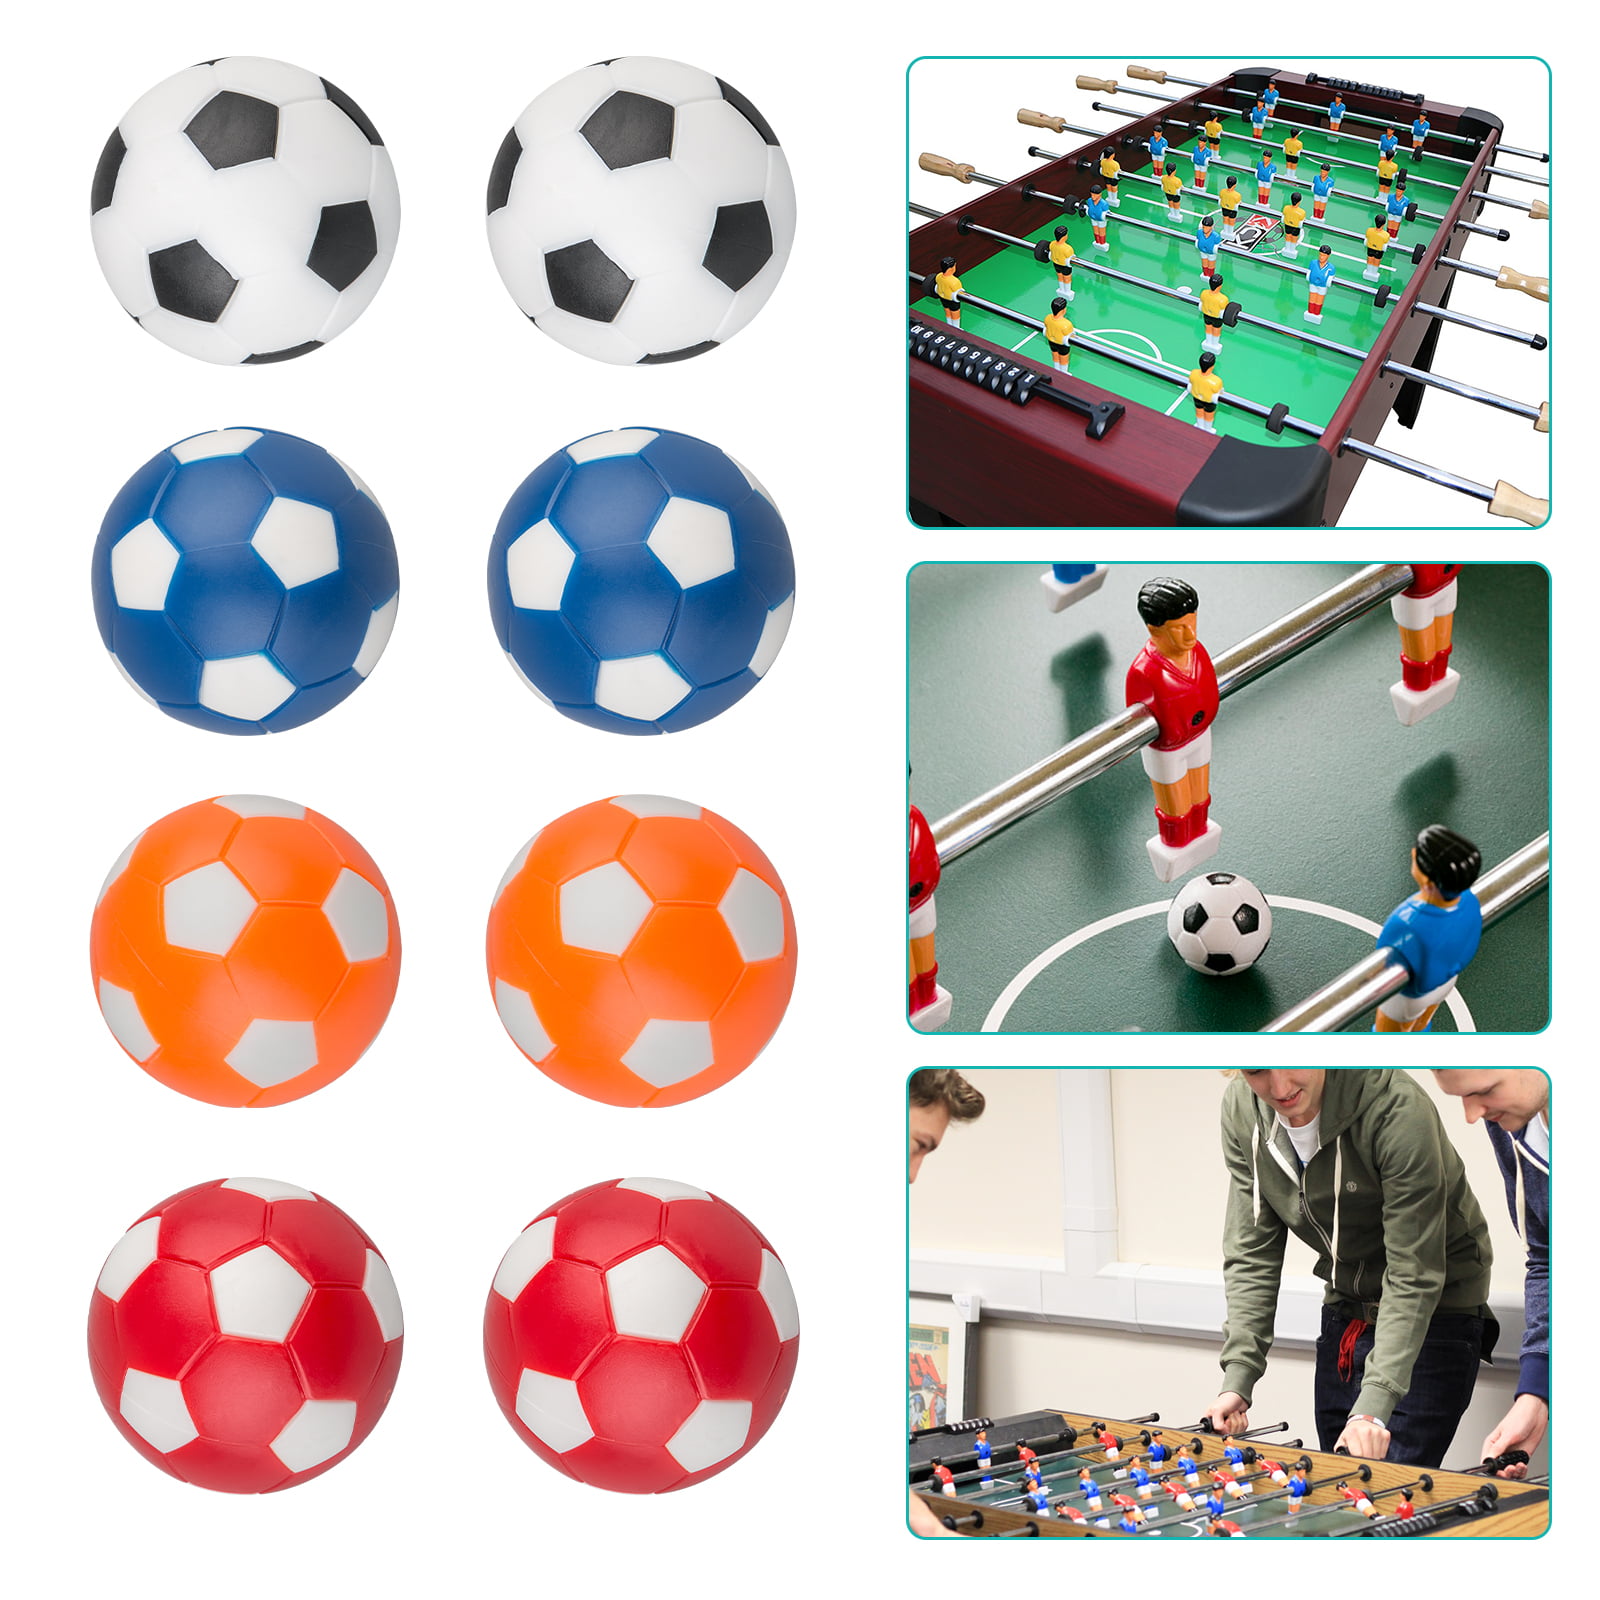 8pcs/Set Table Soccer Foosballs Indoor Game Replacements Kids Toy Mini Balls 